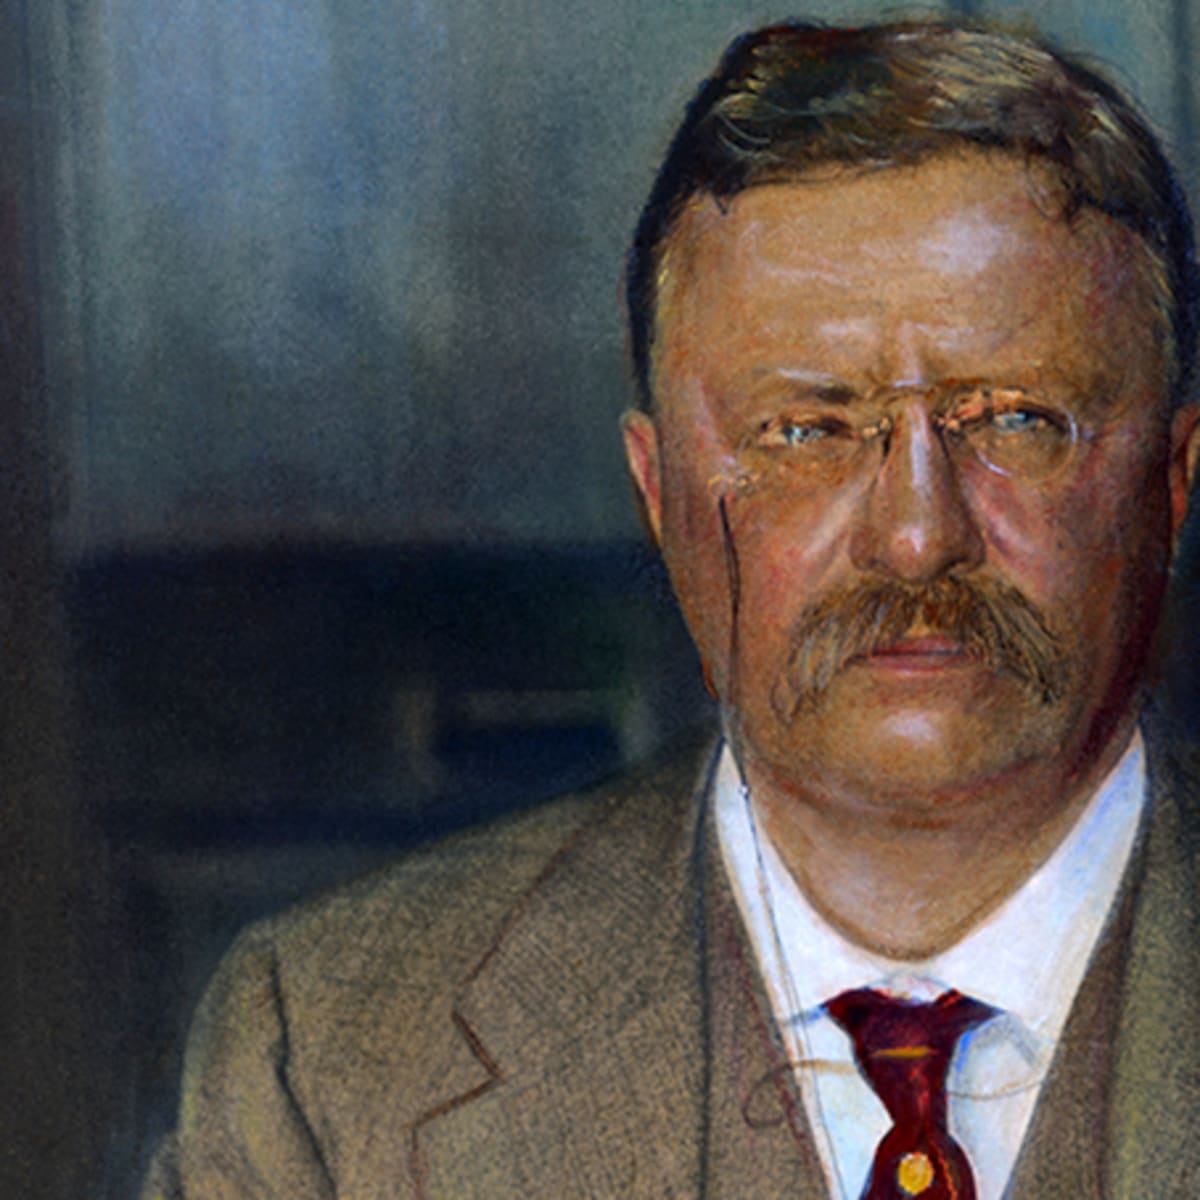 Theodore Roosevelt, Presidency & Death